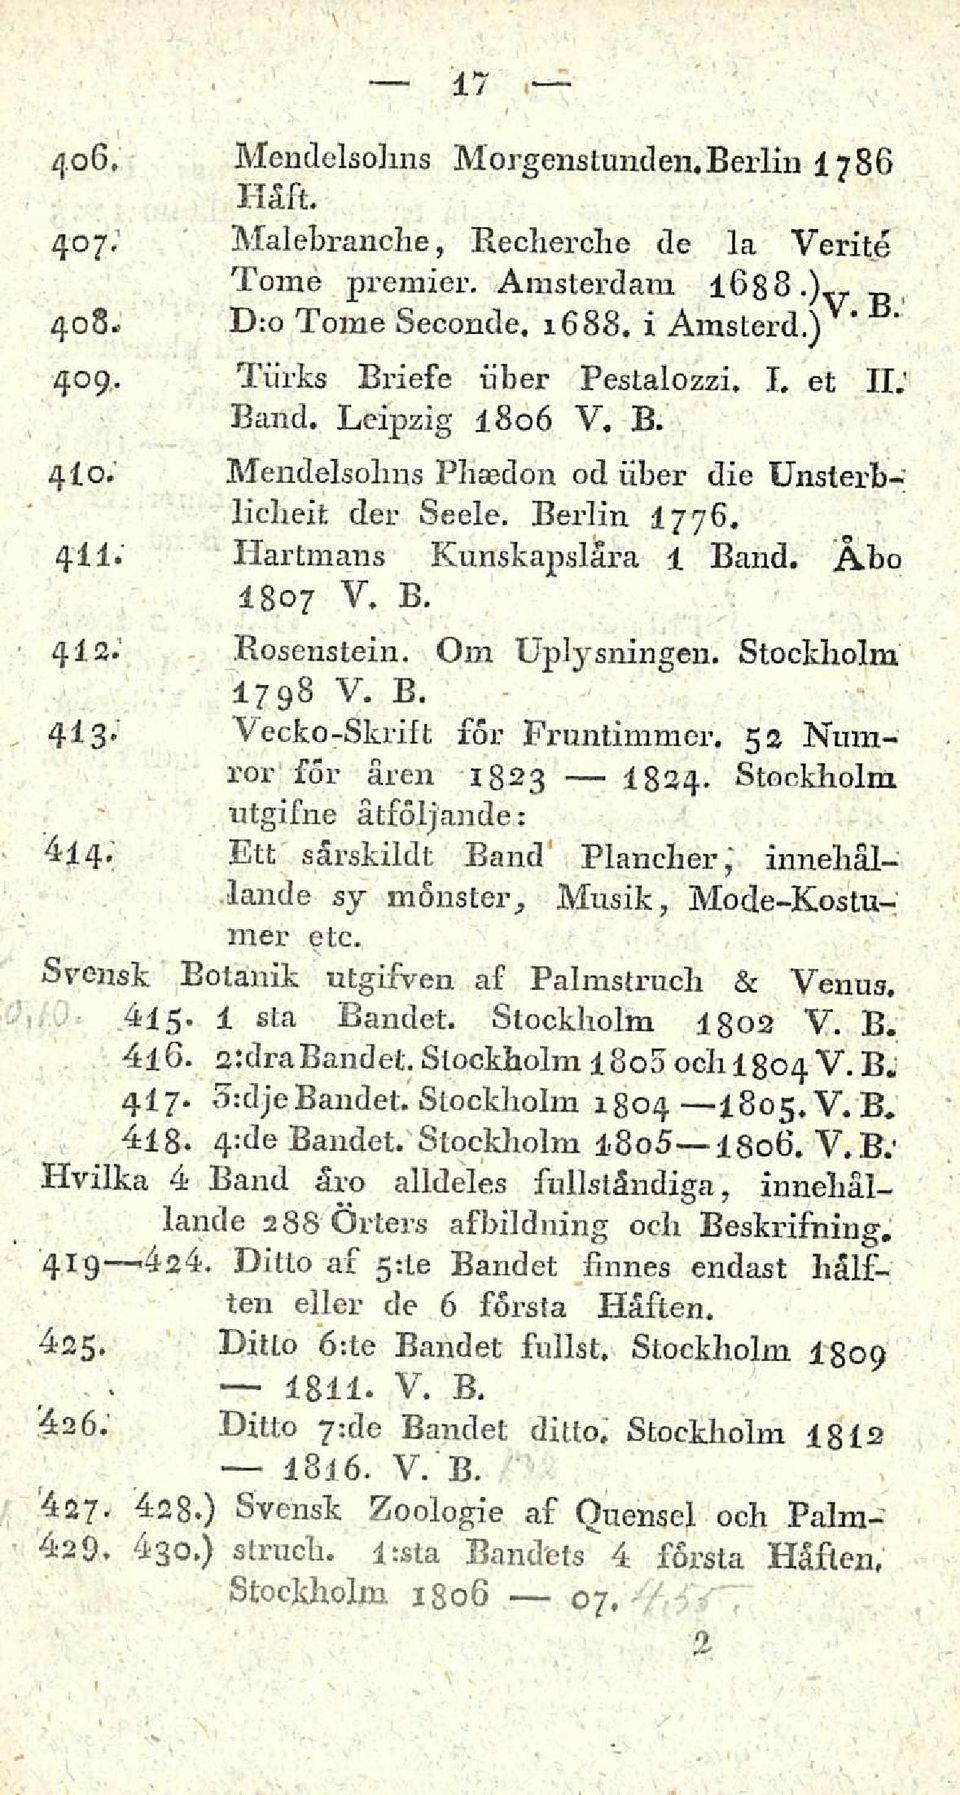 Rosenstein. O m Uplysningen. Stockholm 1798 V. B. 4I3. Vecfco-Skrift for Pruntimmcr. 52 Numror for åren 1823 I834. Stockholm utgifne ätfoljande: 4* Ett särskildt Band Plancher, innehäl-.